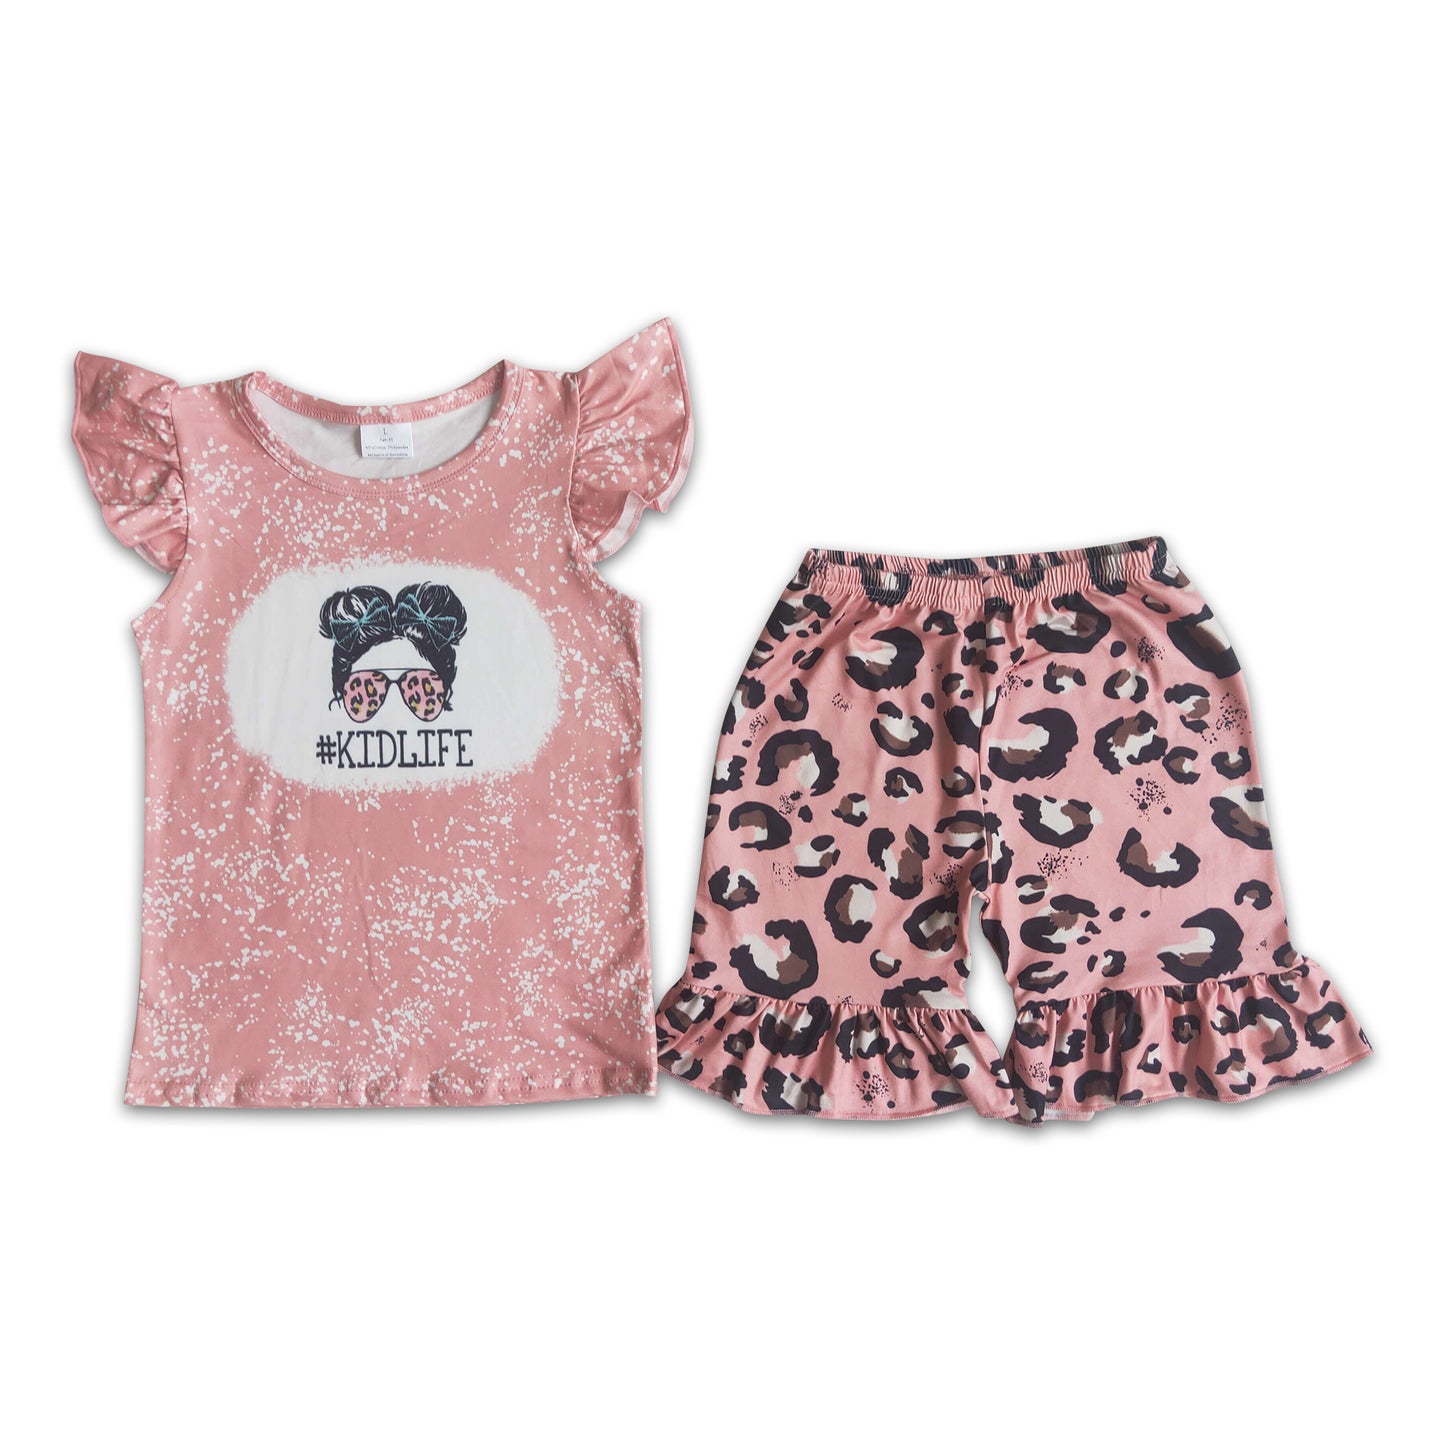 Kid life shirt leopard shorts children clothing girls